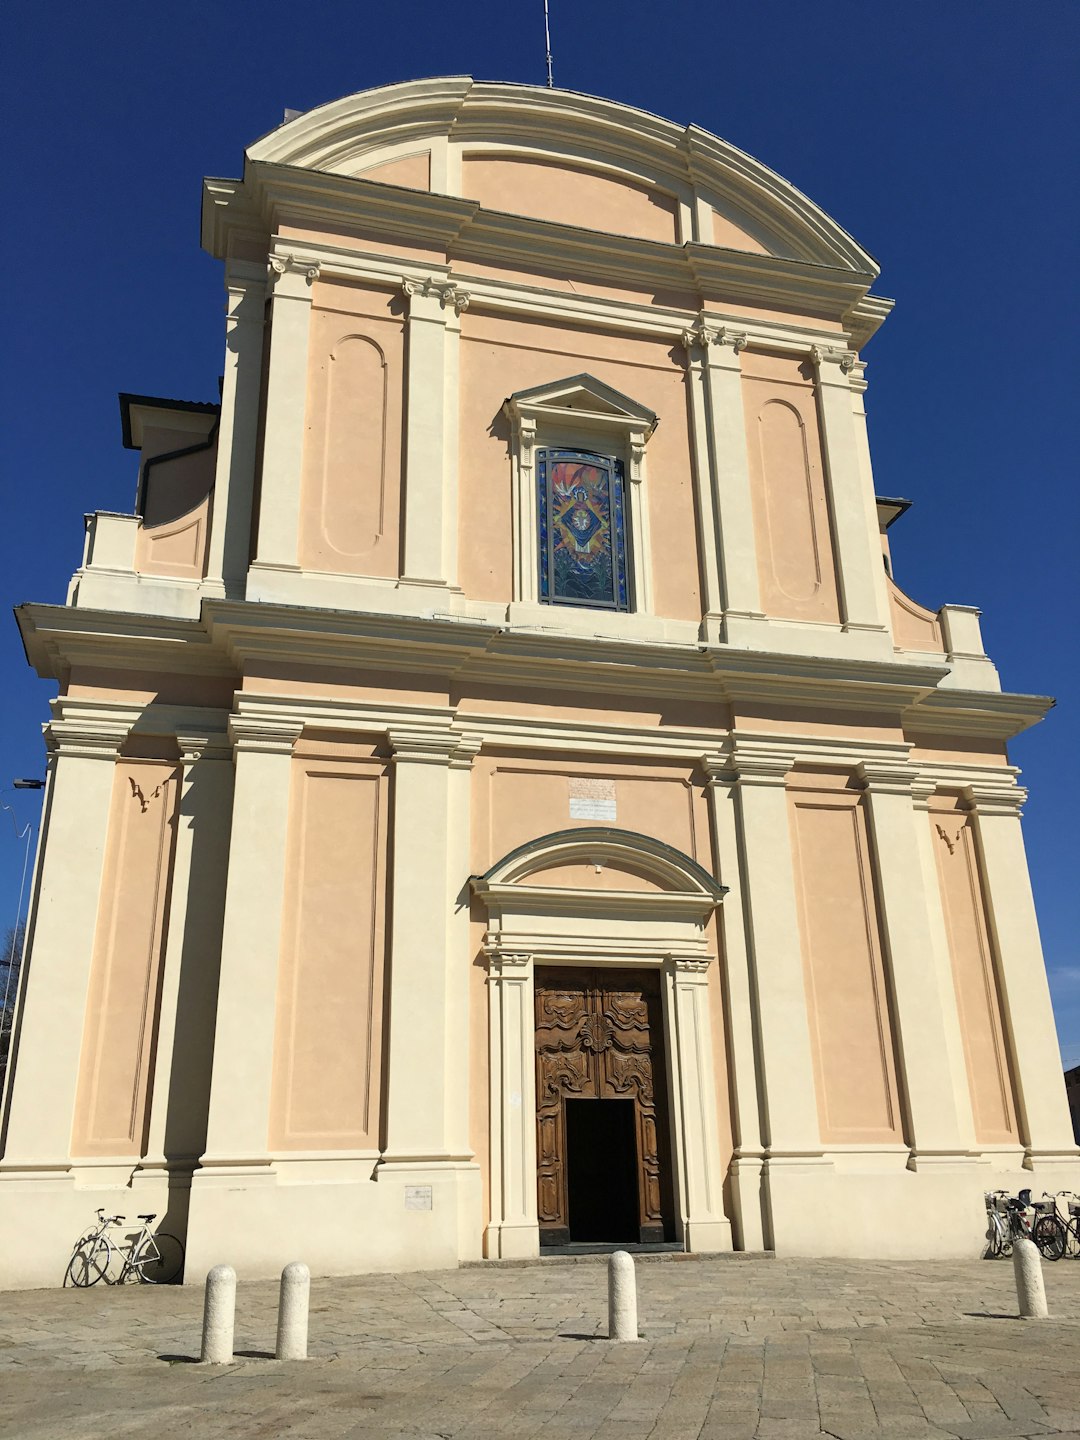 Place of worship photo spot Poggio Rusco Italy